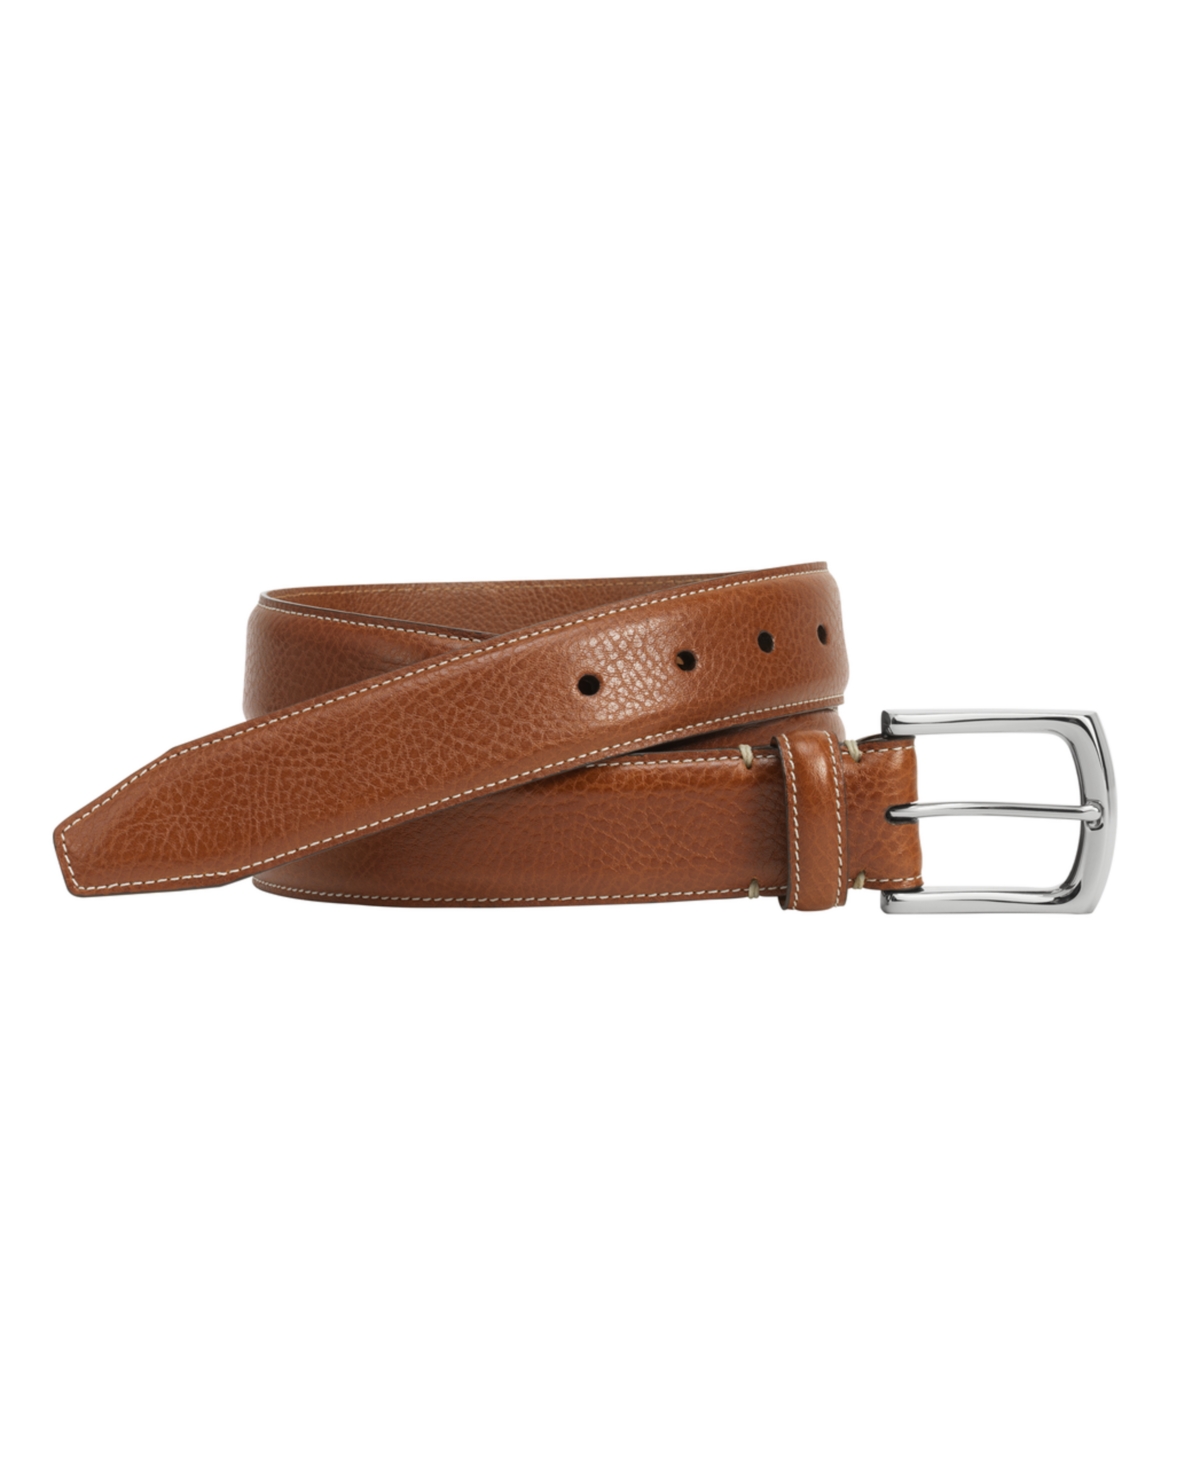 Johnston & Murphy Men's Topstitched Leather Belt